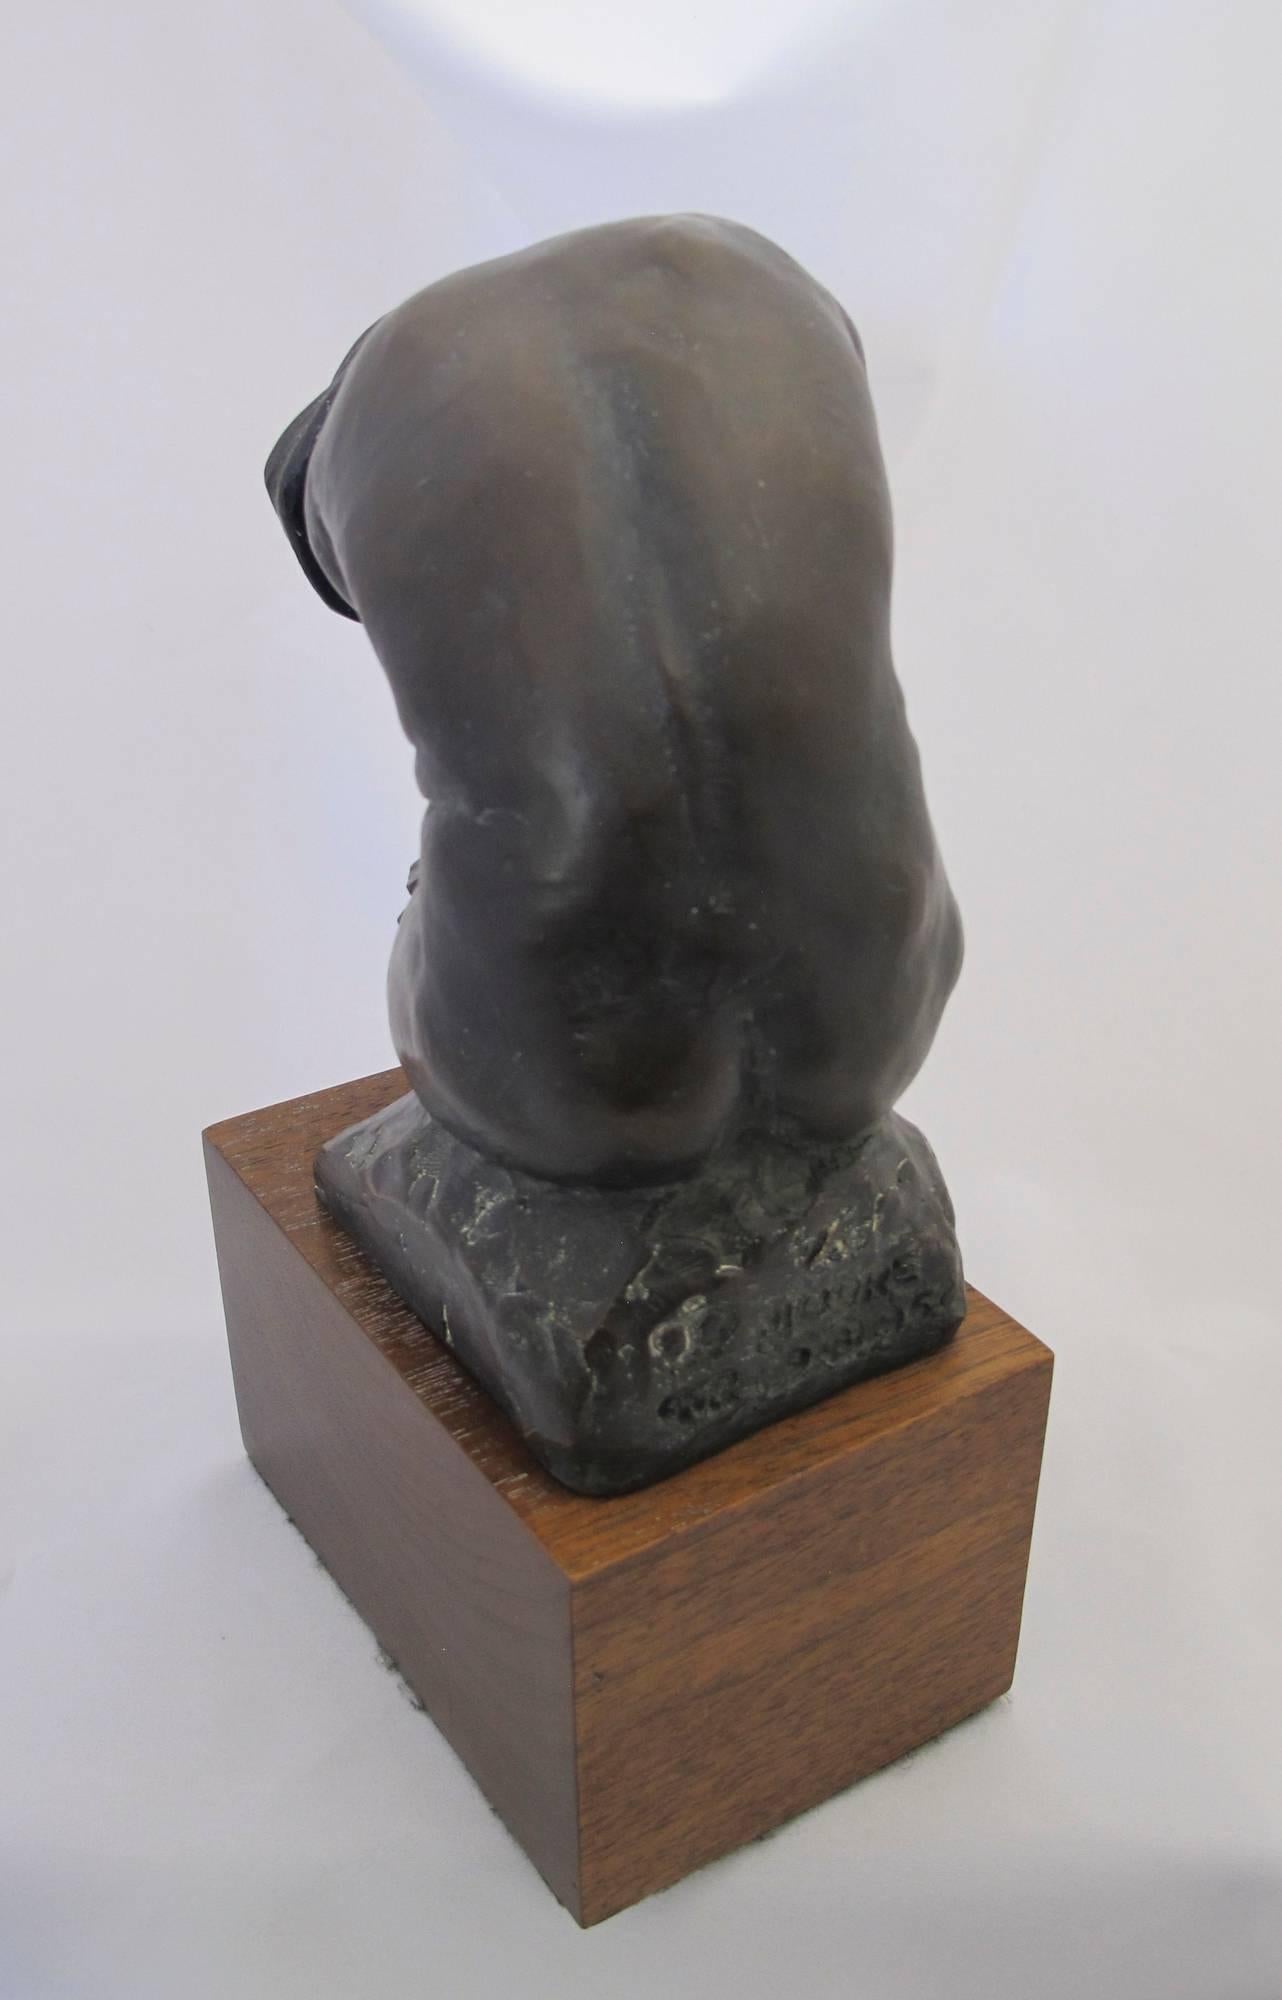 Indigo, bathing nude, bronze sculpture - Contemporary Sculpture by Paul Moore